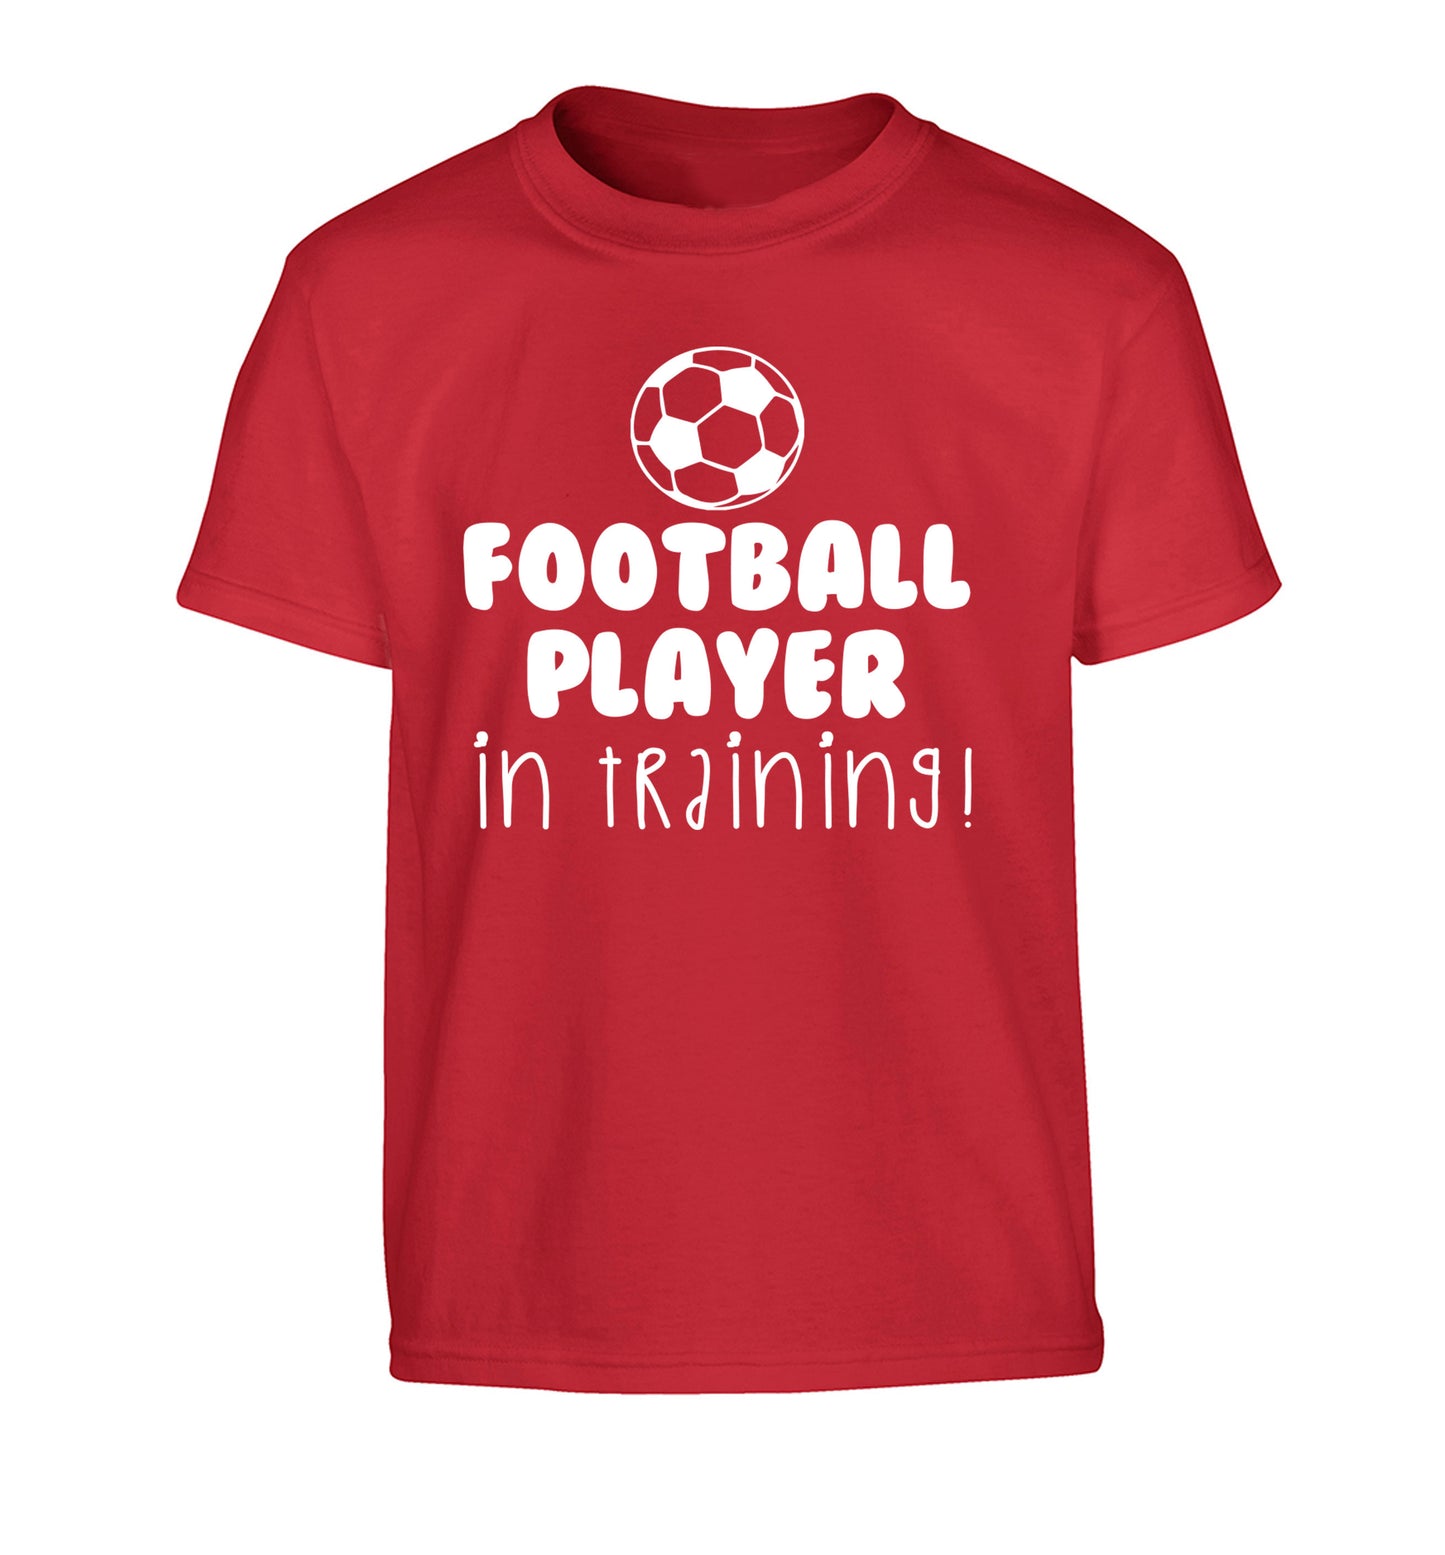 Football player in training Children's red Tshirt 12-14 Years